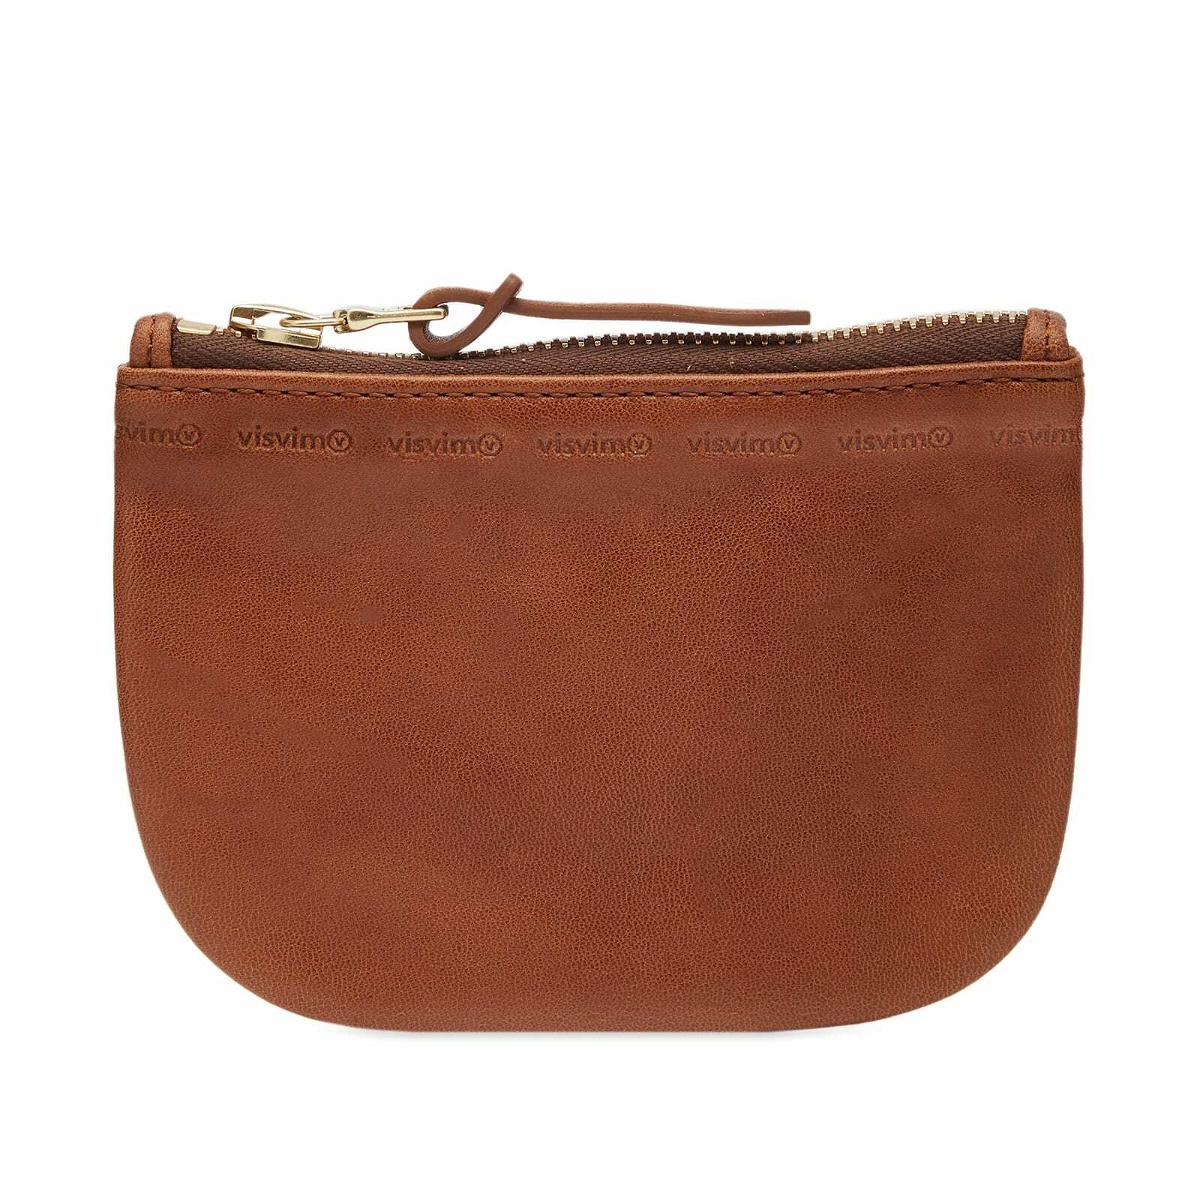 Photo: Visvim Men's Vivism Leather Wallet in Brown